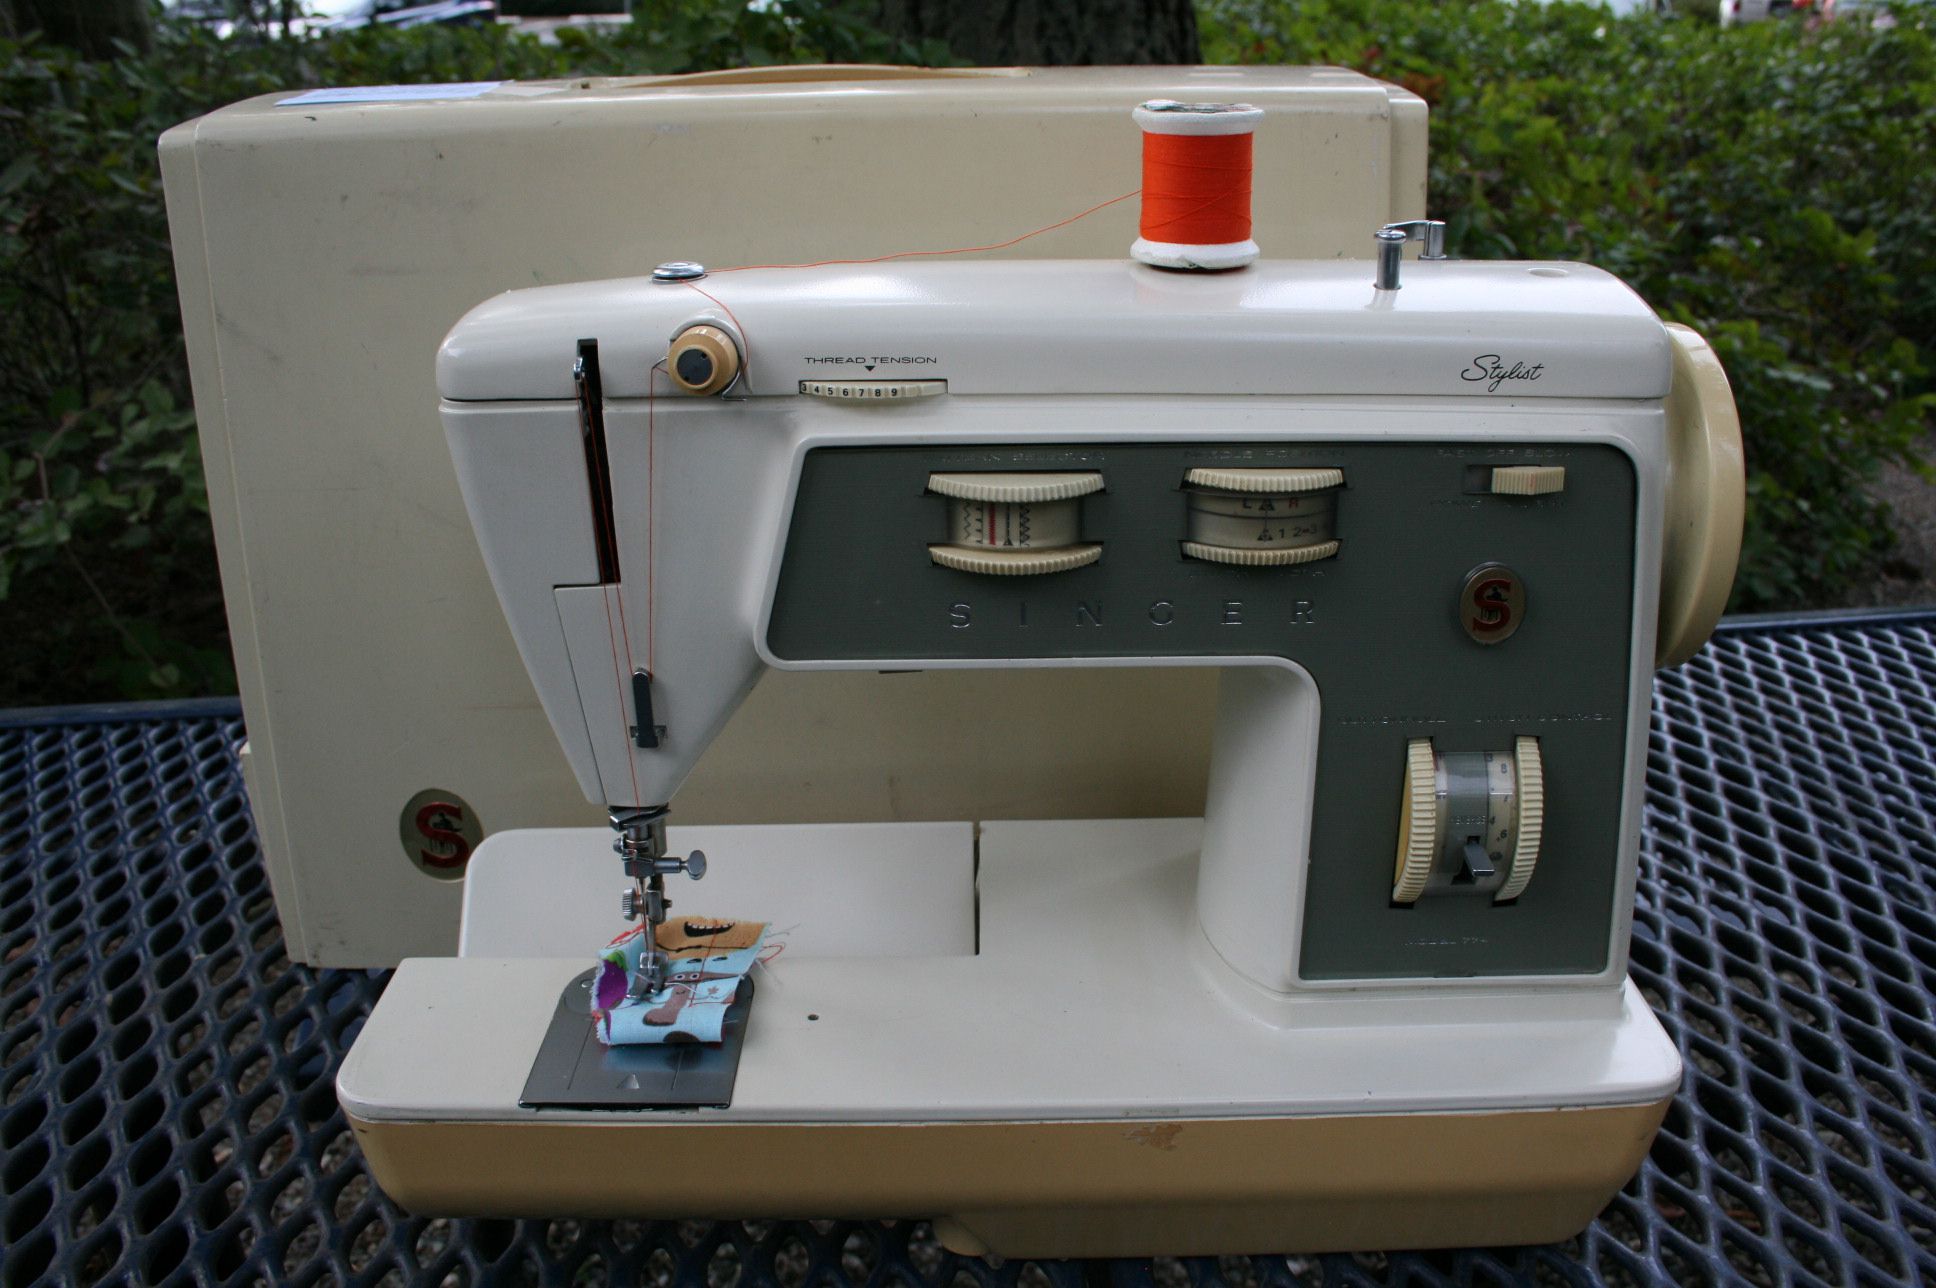 Singer Stylist free arm sewing machine 774 SERVICED